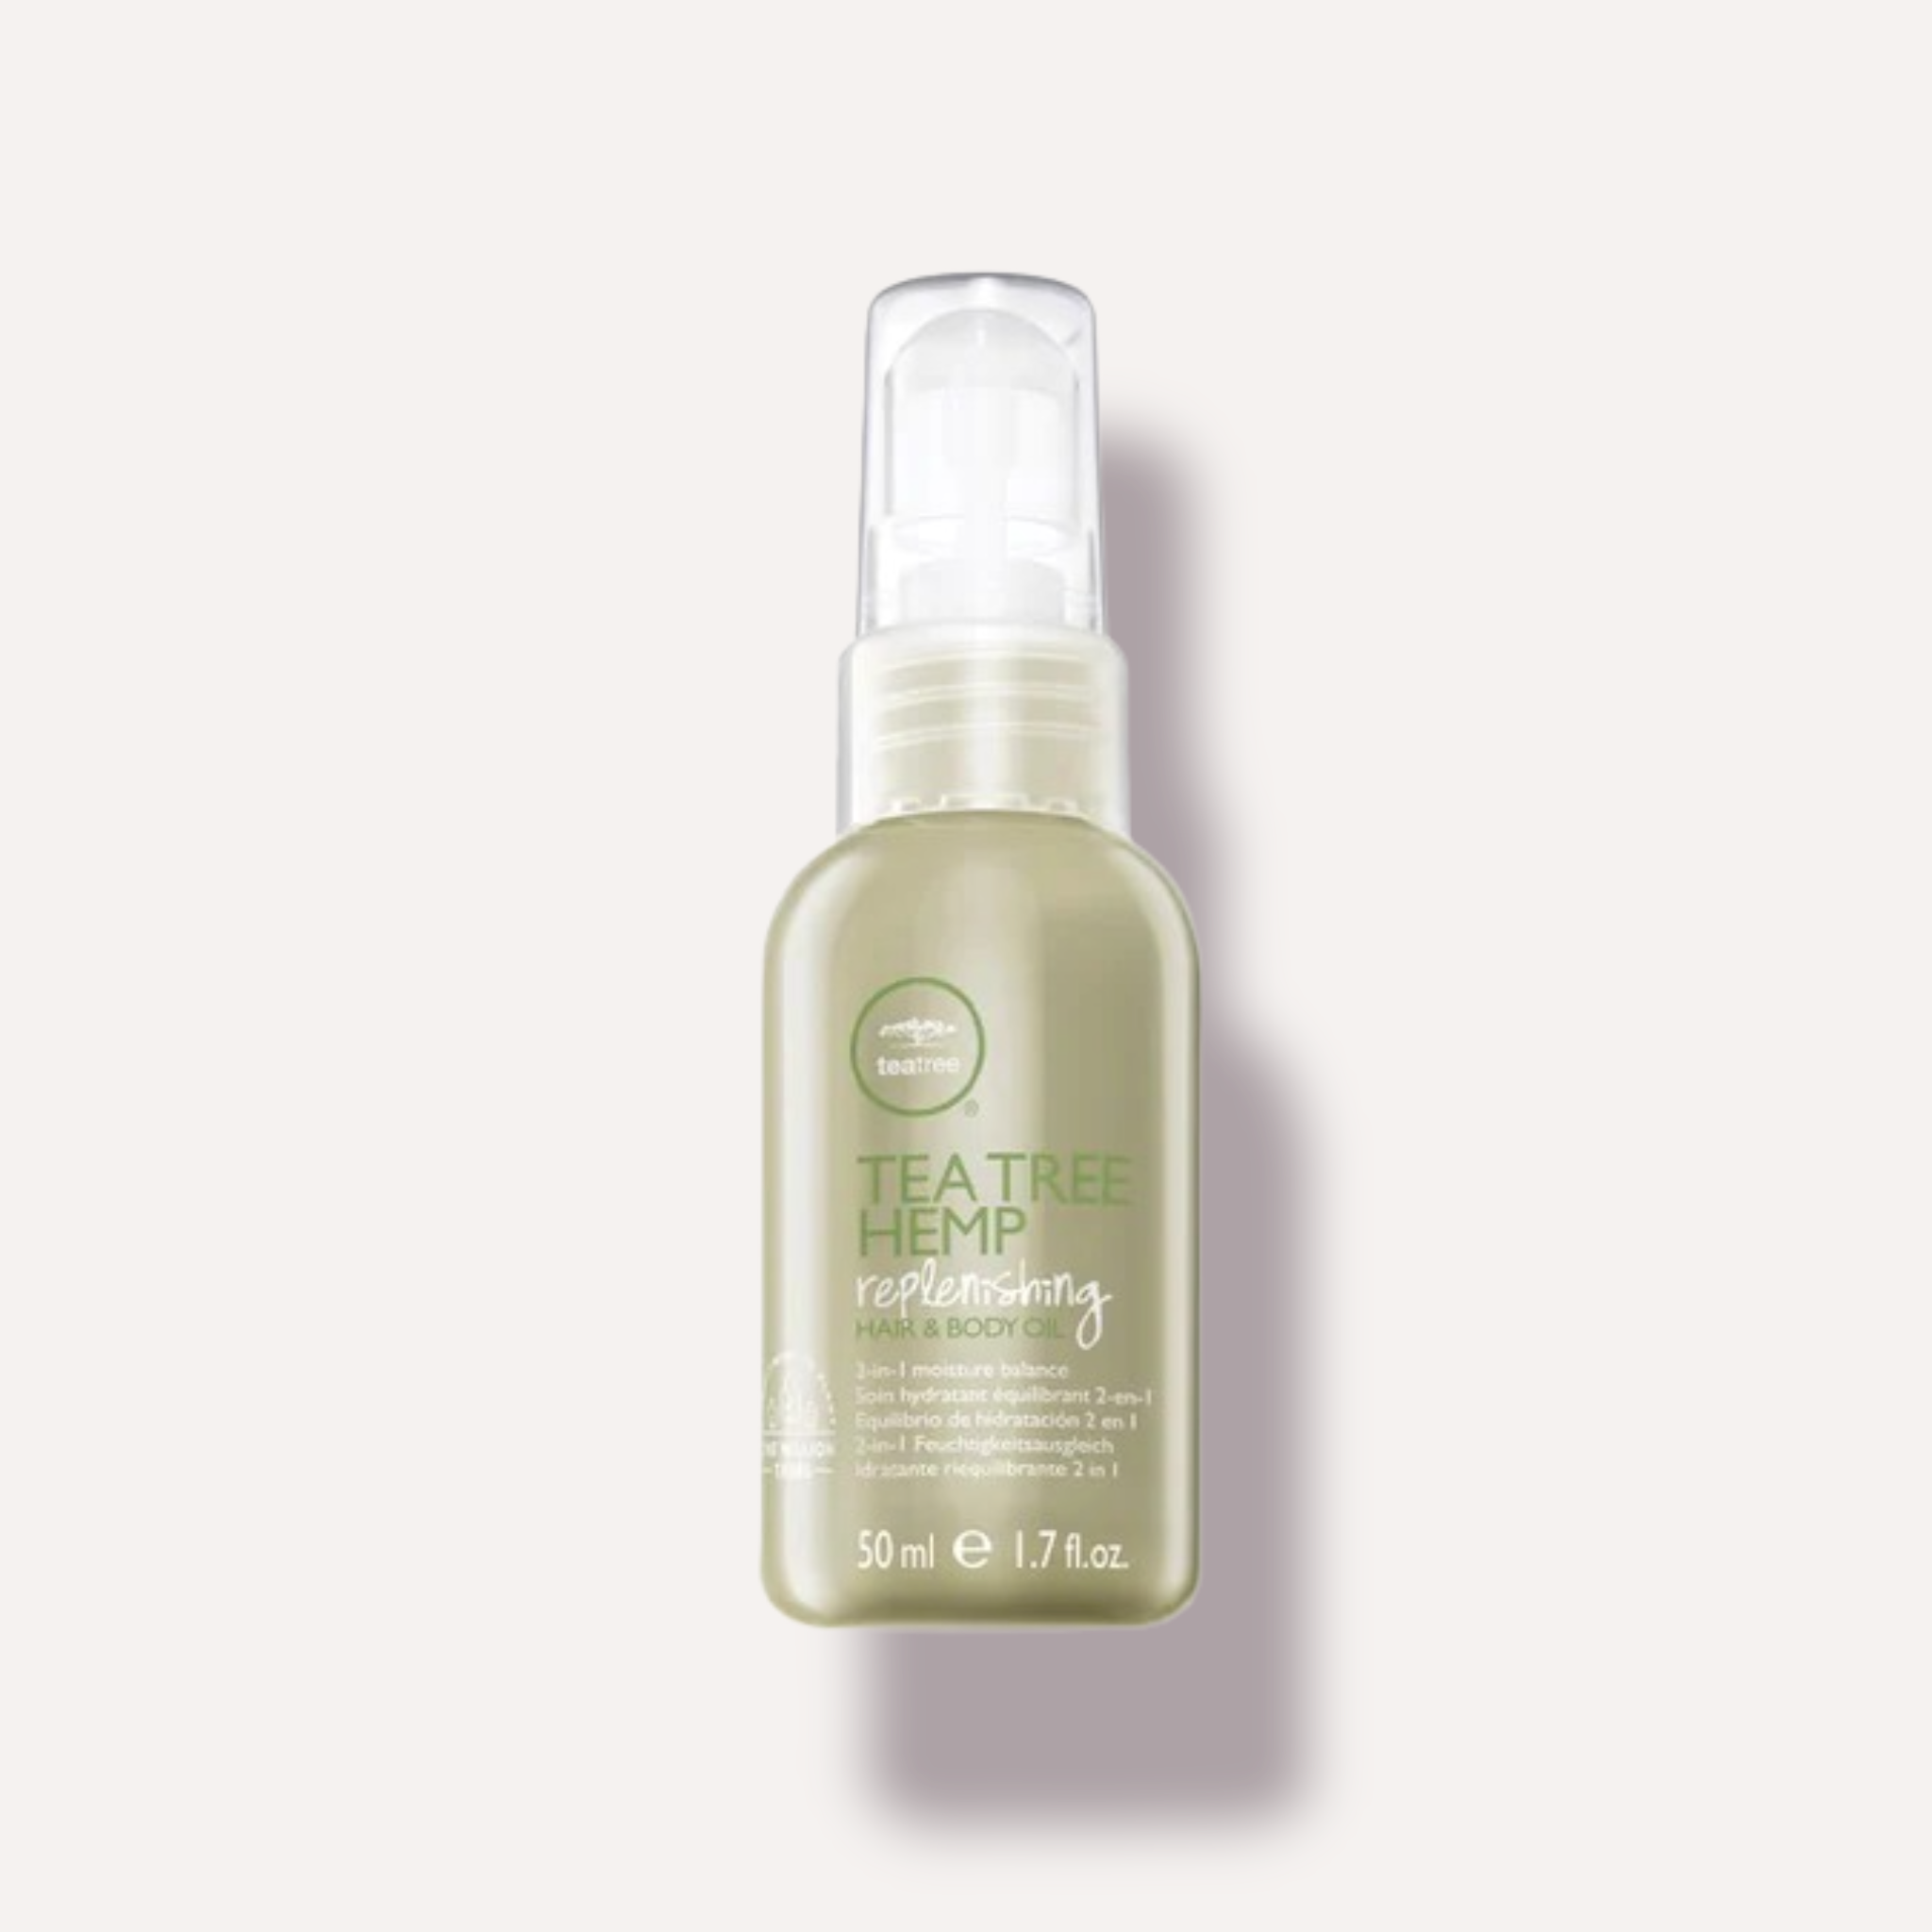 Paul Mitchell Tea Tree Hemp Replenishing Hair & Body Oil | Skin Love Cream